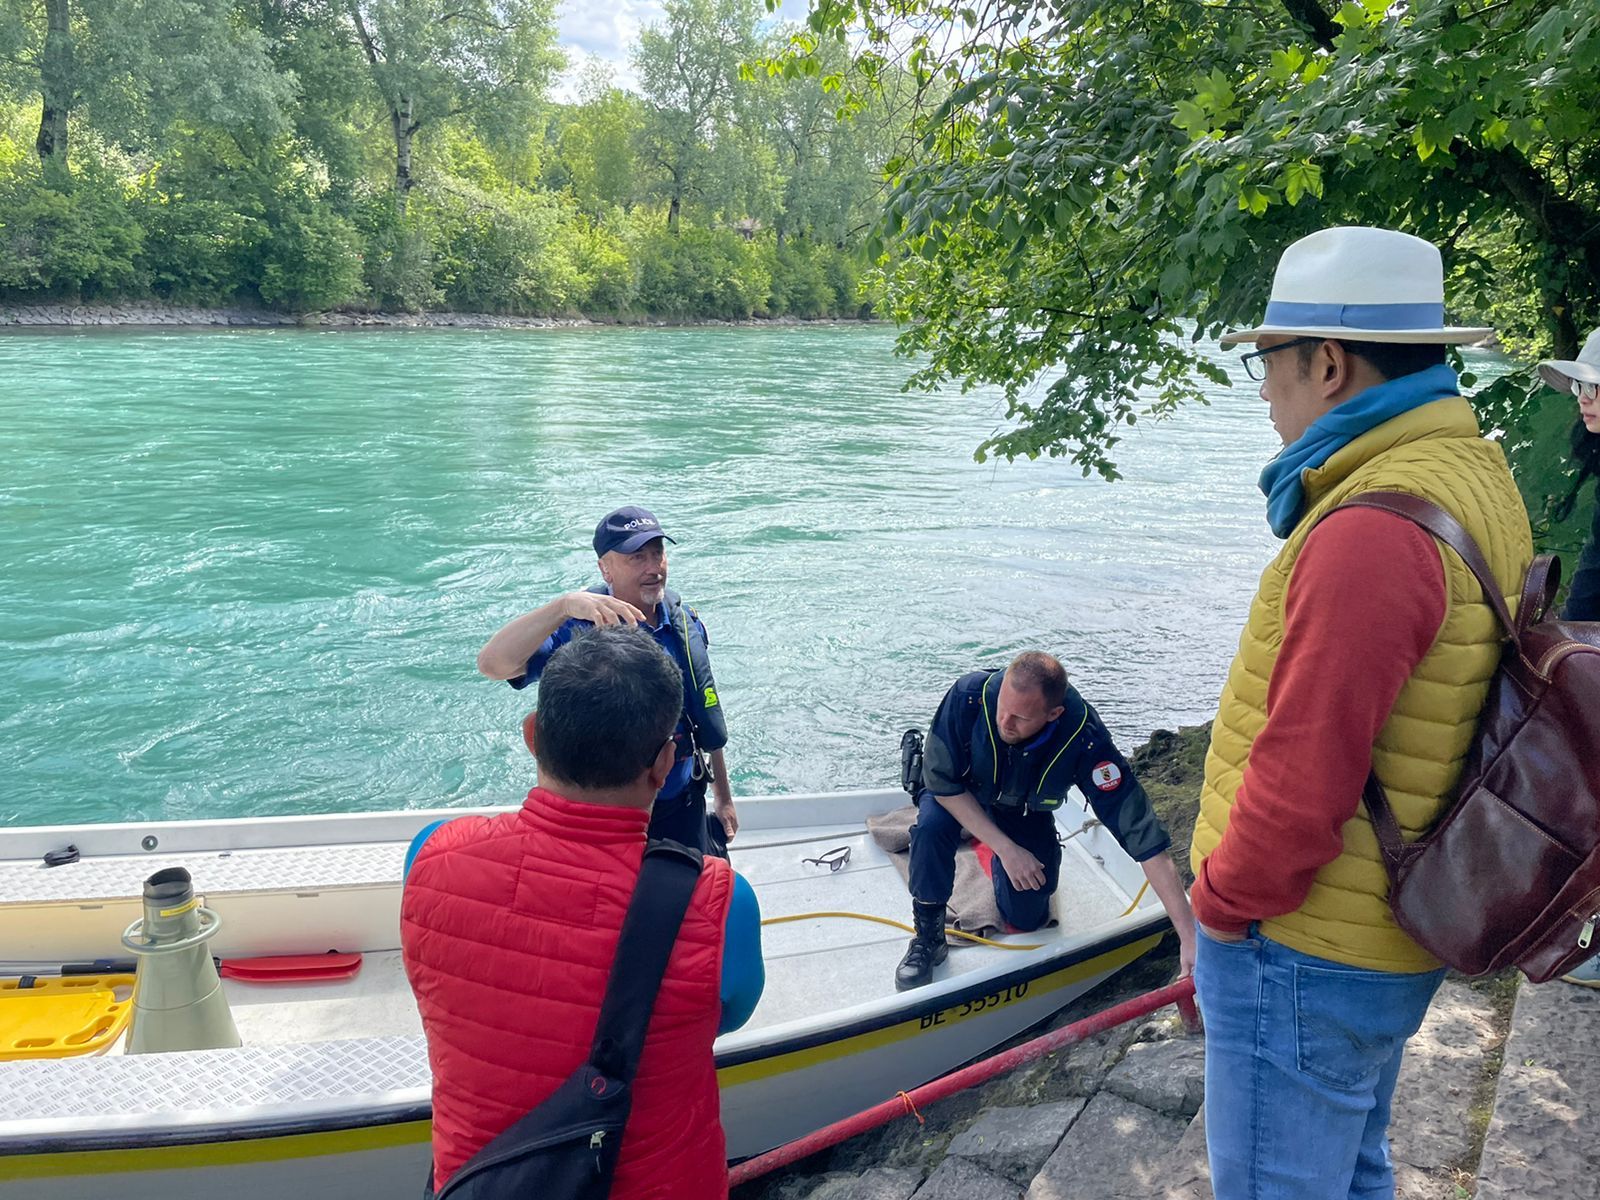 Gubernur Jawa Barat Ridwan Kamil memantau langsung proses pencarian putranya, Eril yang hilang di Sungai Aare, Bern, Swiss.